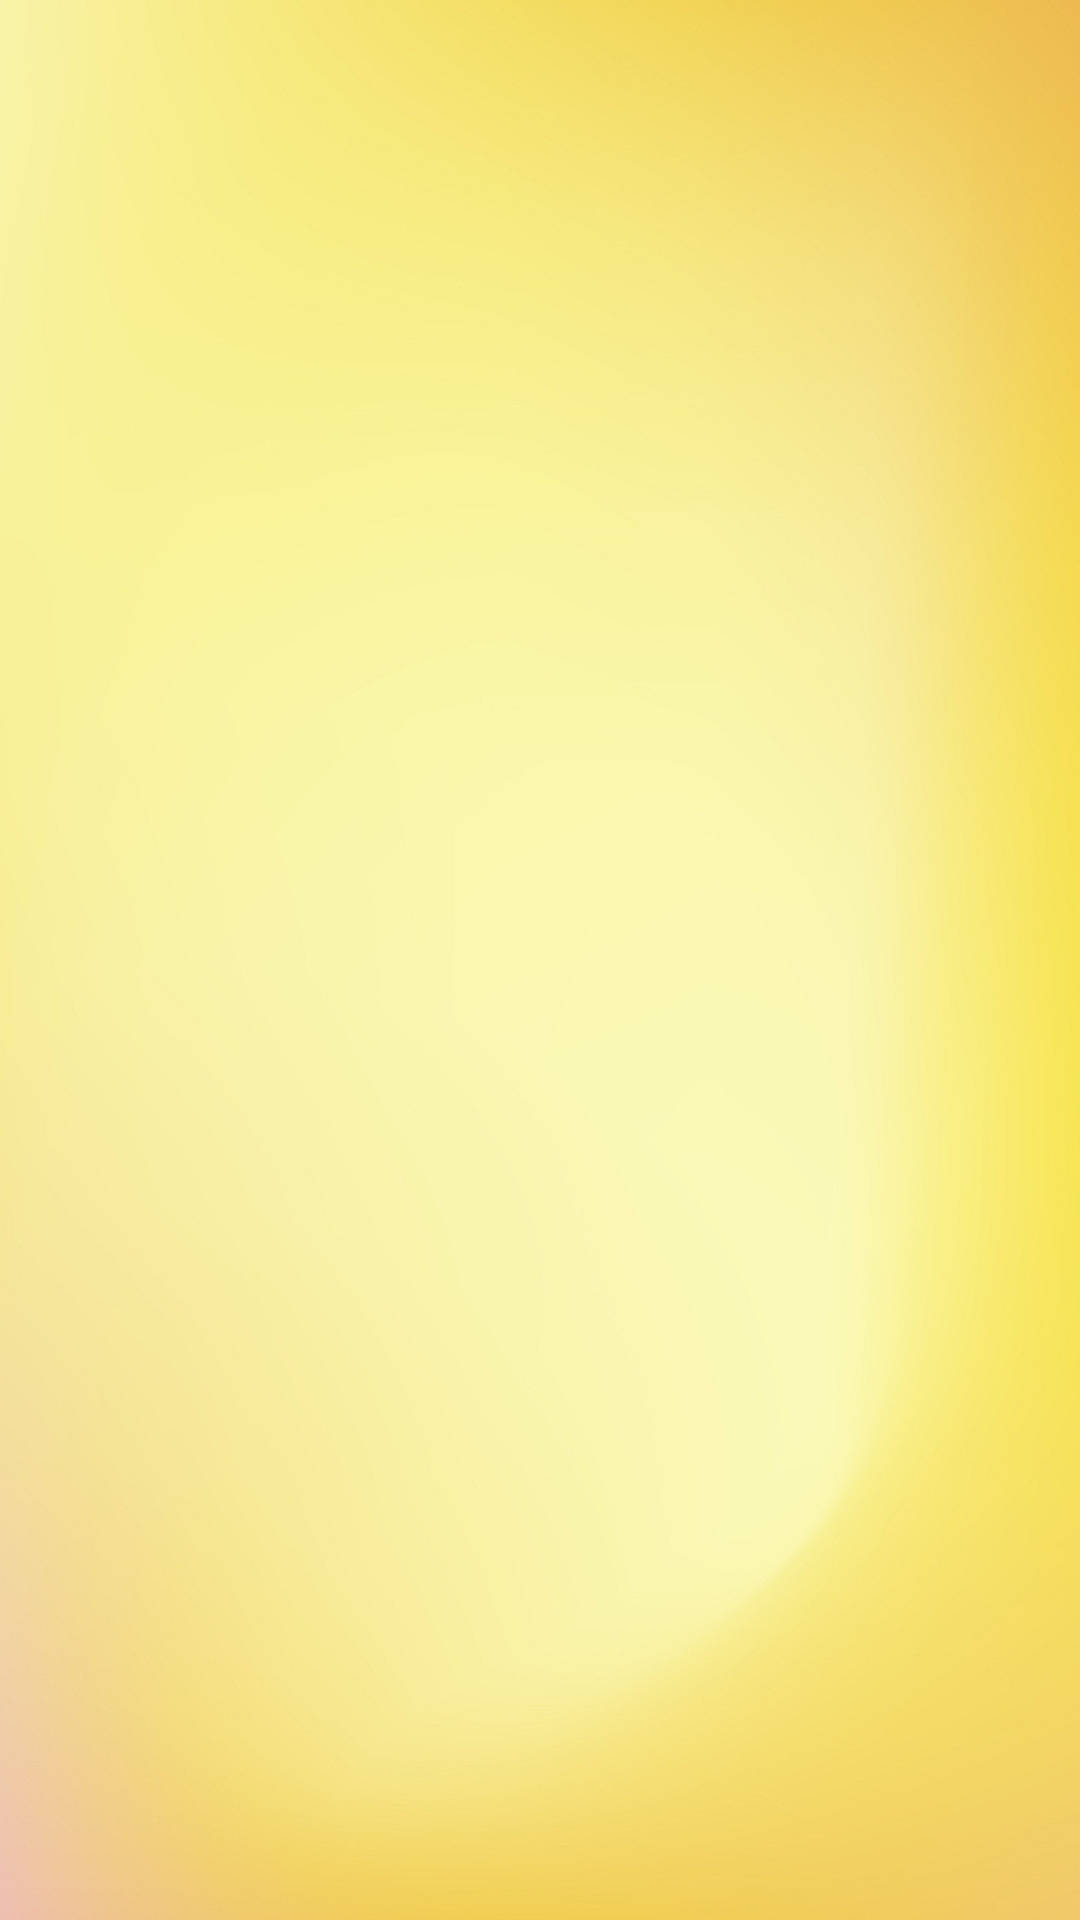 Gradient Plain Yellow Iphone Wallpaper